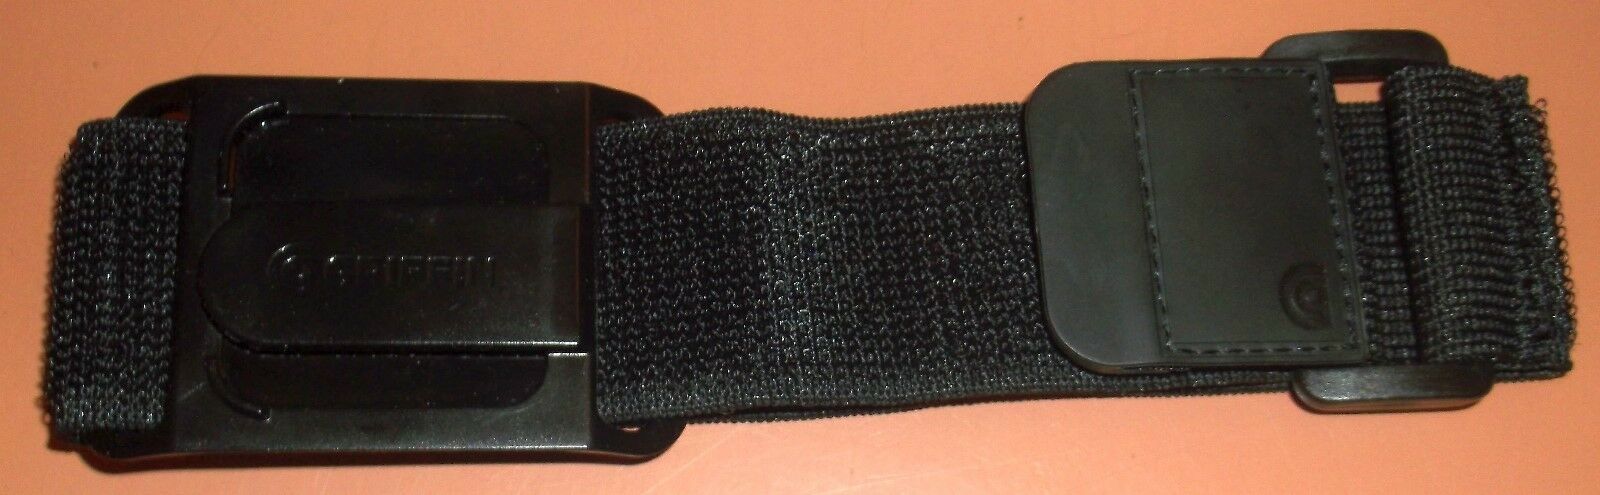 Griffin AeroSport Adjustable Armband for Apple iPod nano 6G, Black, NEW